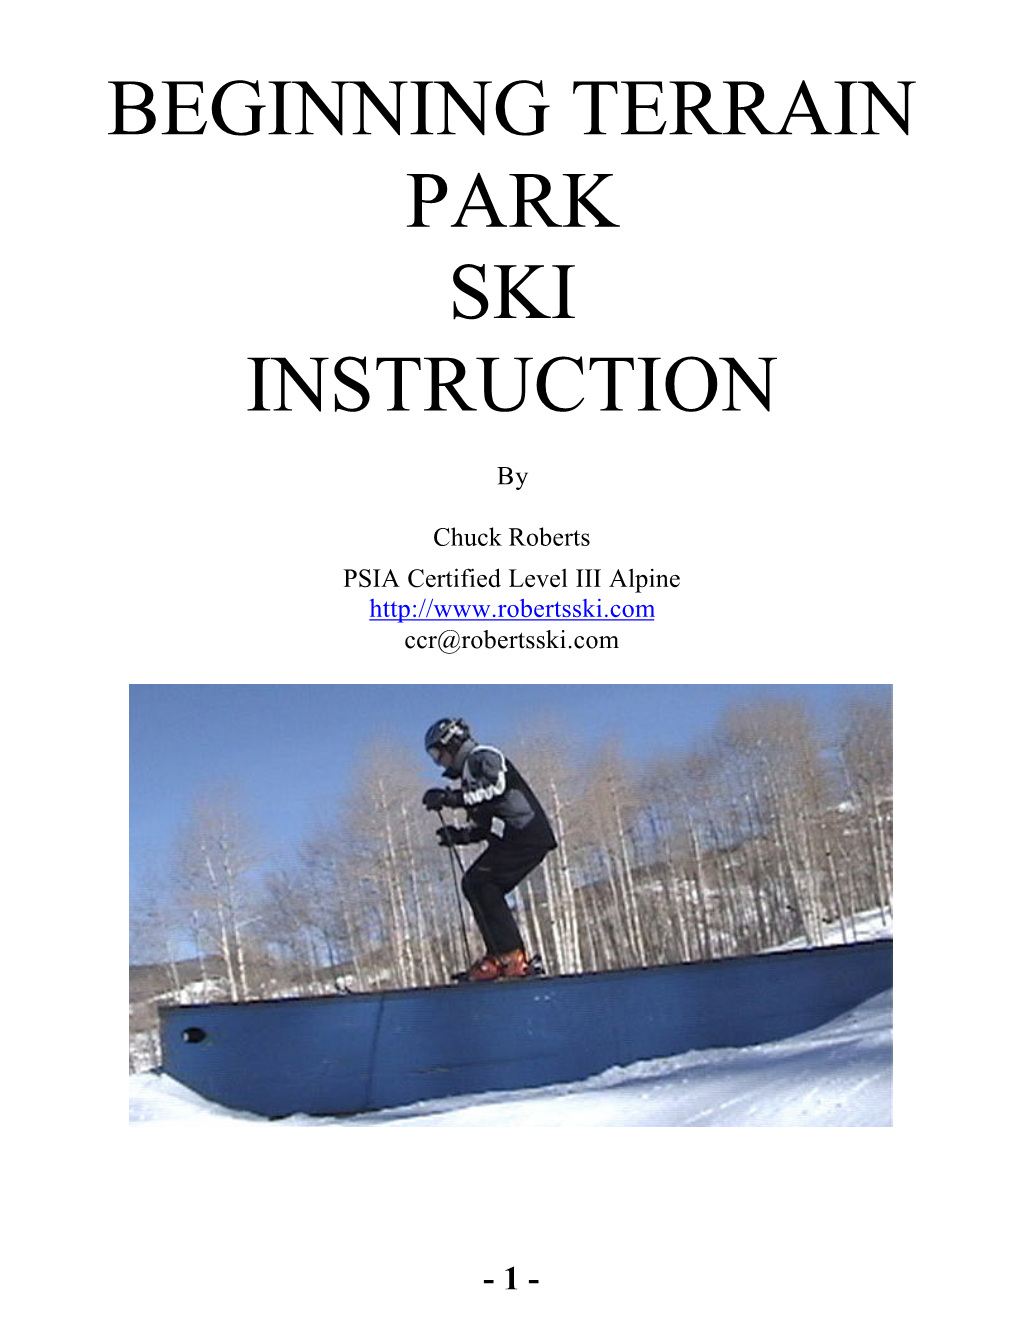 Beginning Terrain Park Ski Instruction